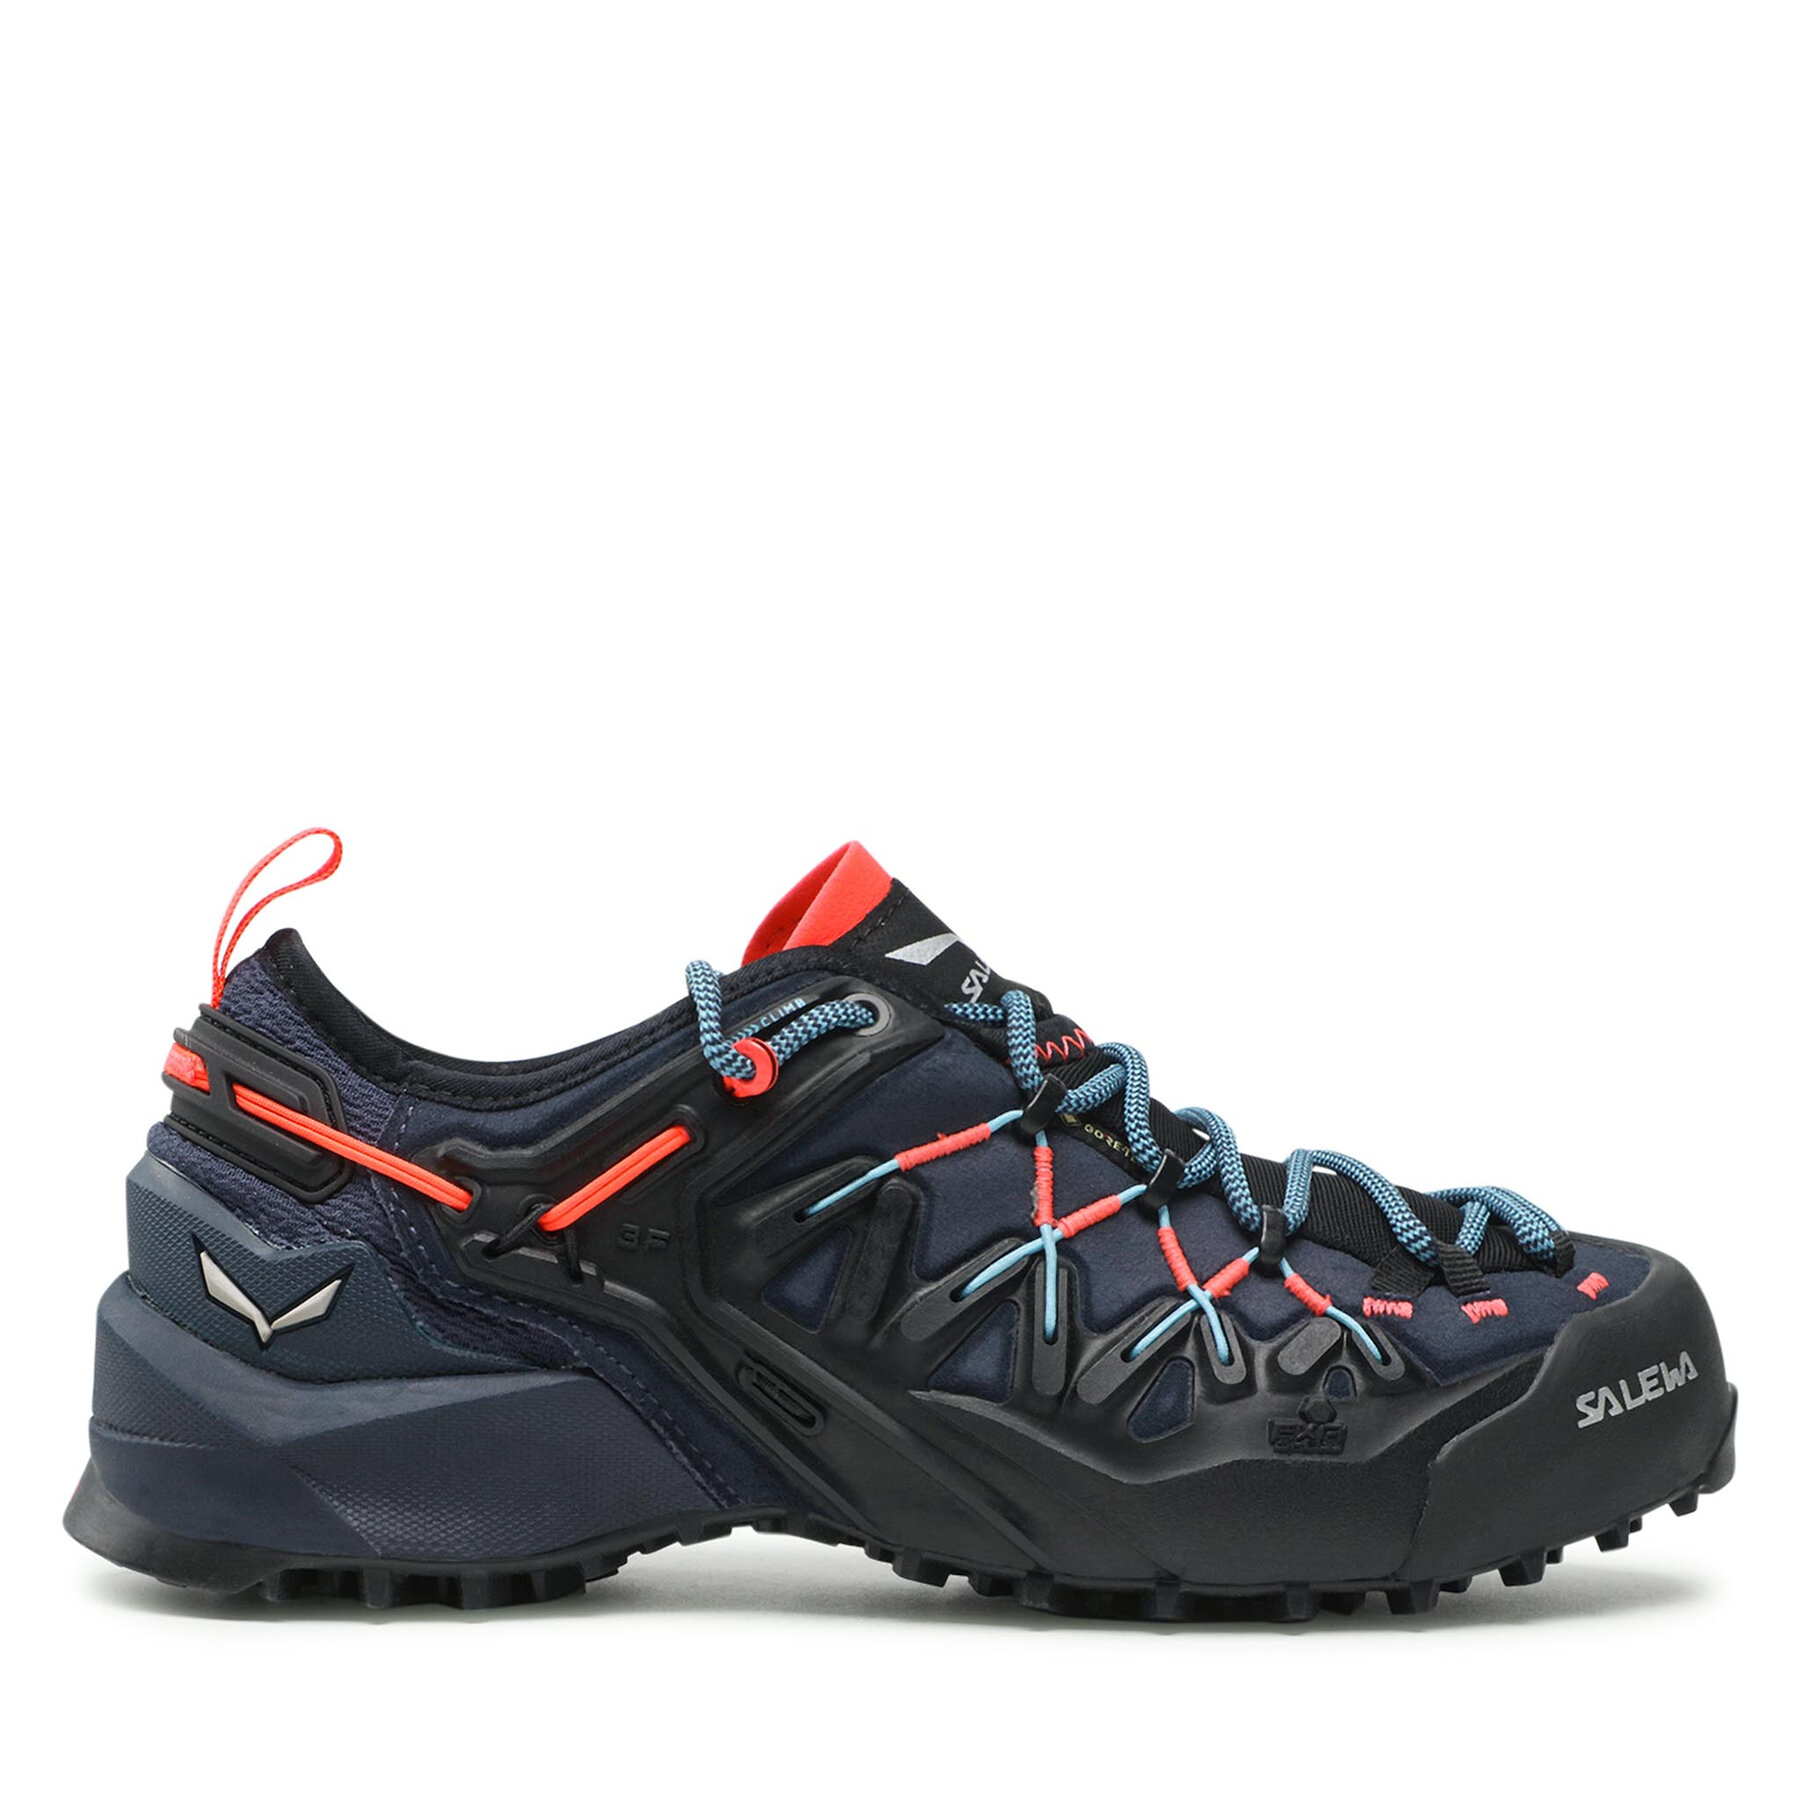 Chaussures de trekking Salewa Ws Wildfire Edge Gtx GORE-TEX 61376-3965 Bleu marine